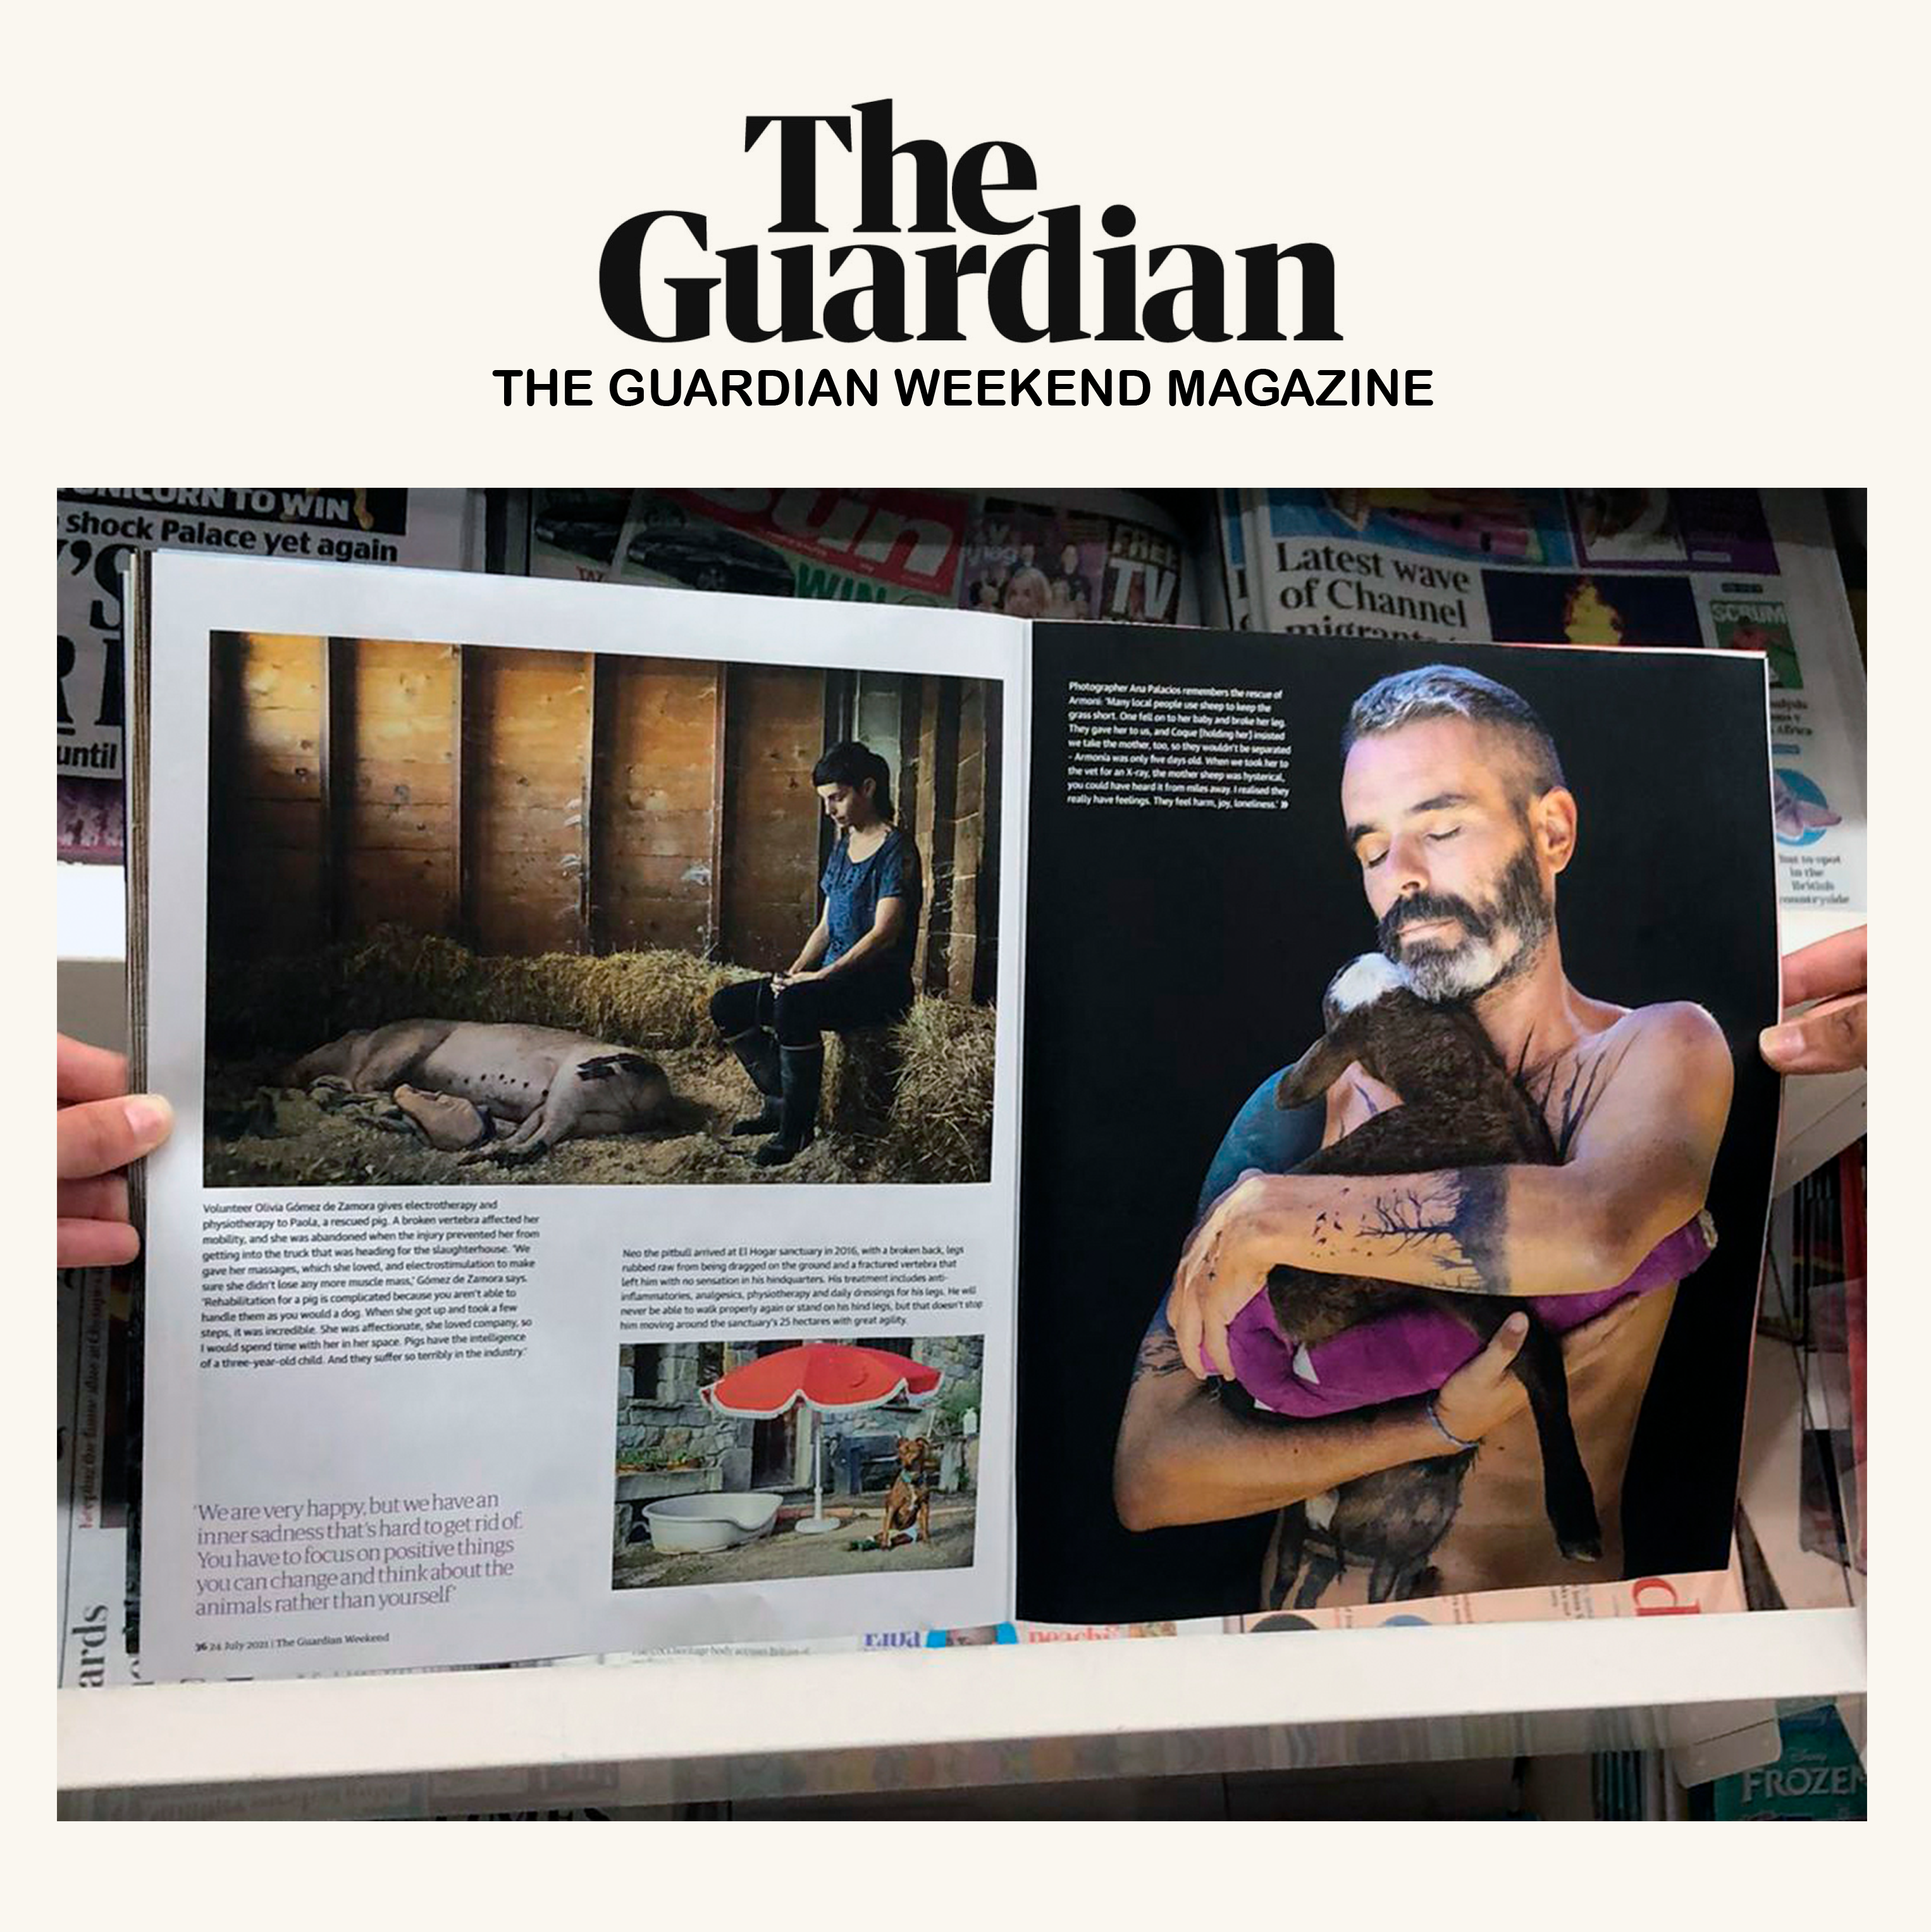 Thumbnail of Spanish animal sanctuaries at The Guardian Weekend Magazine